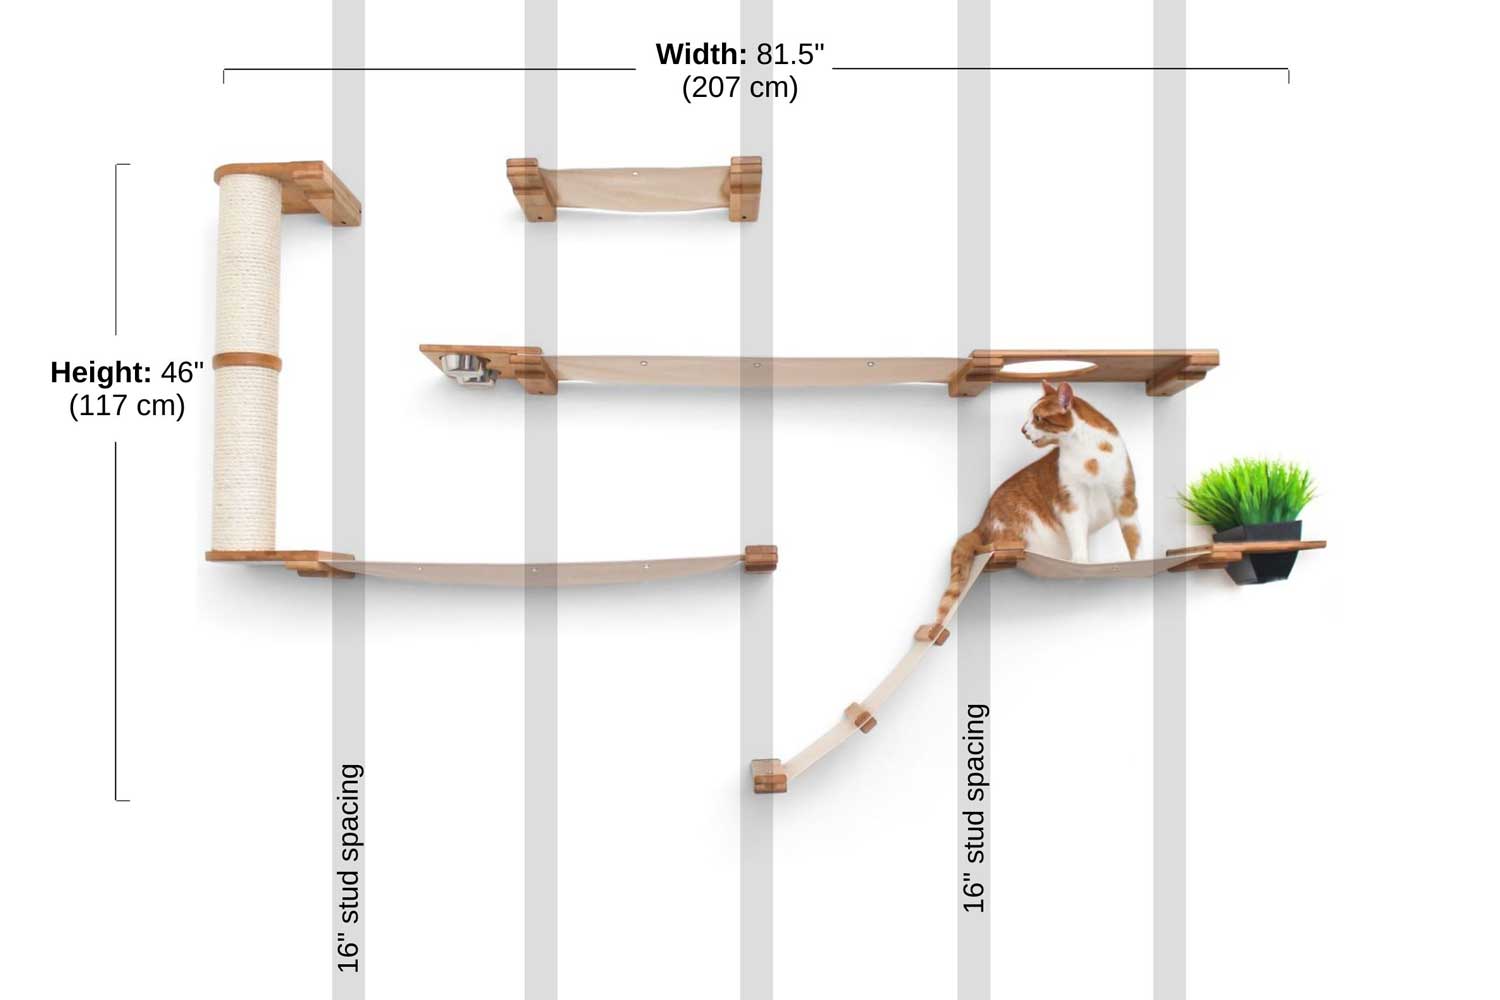 The Bunker Cat Condo measurements